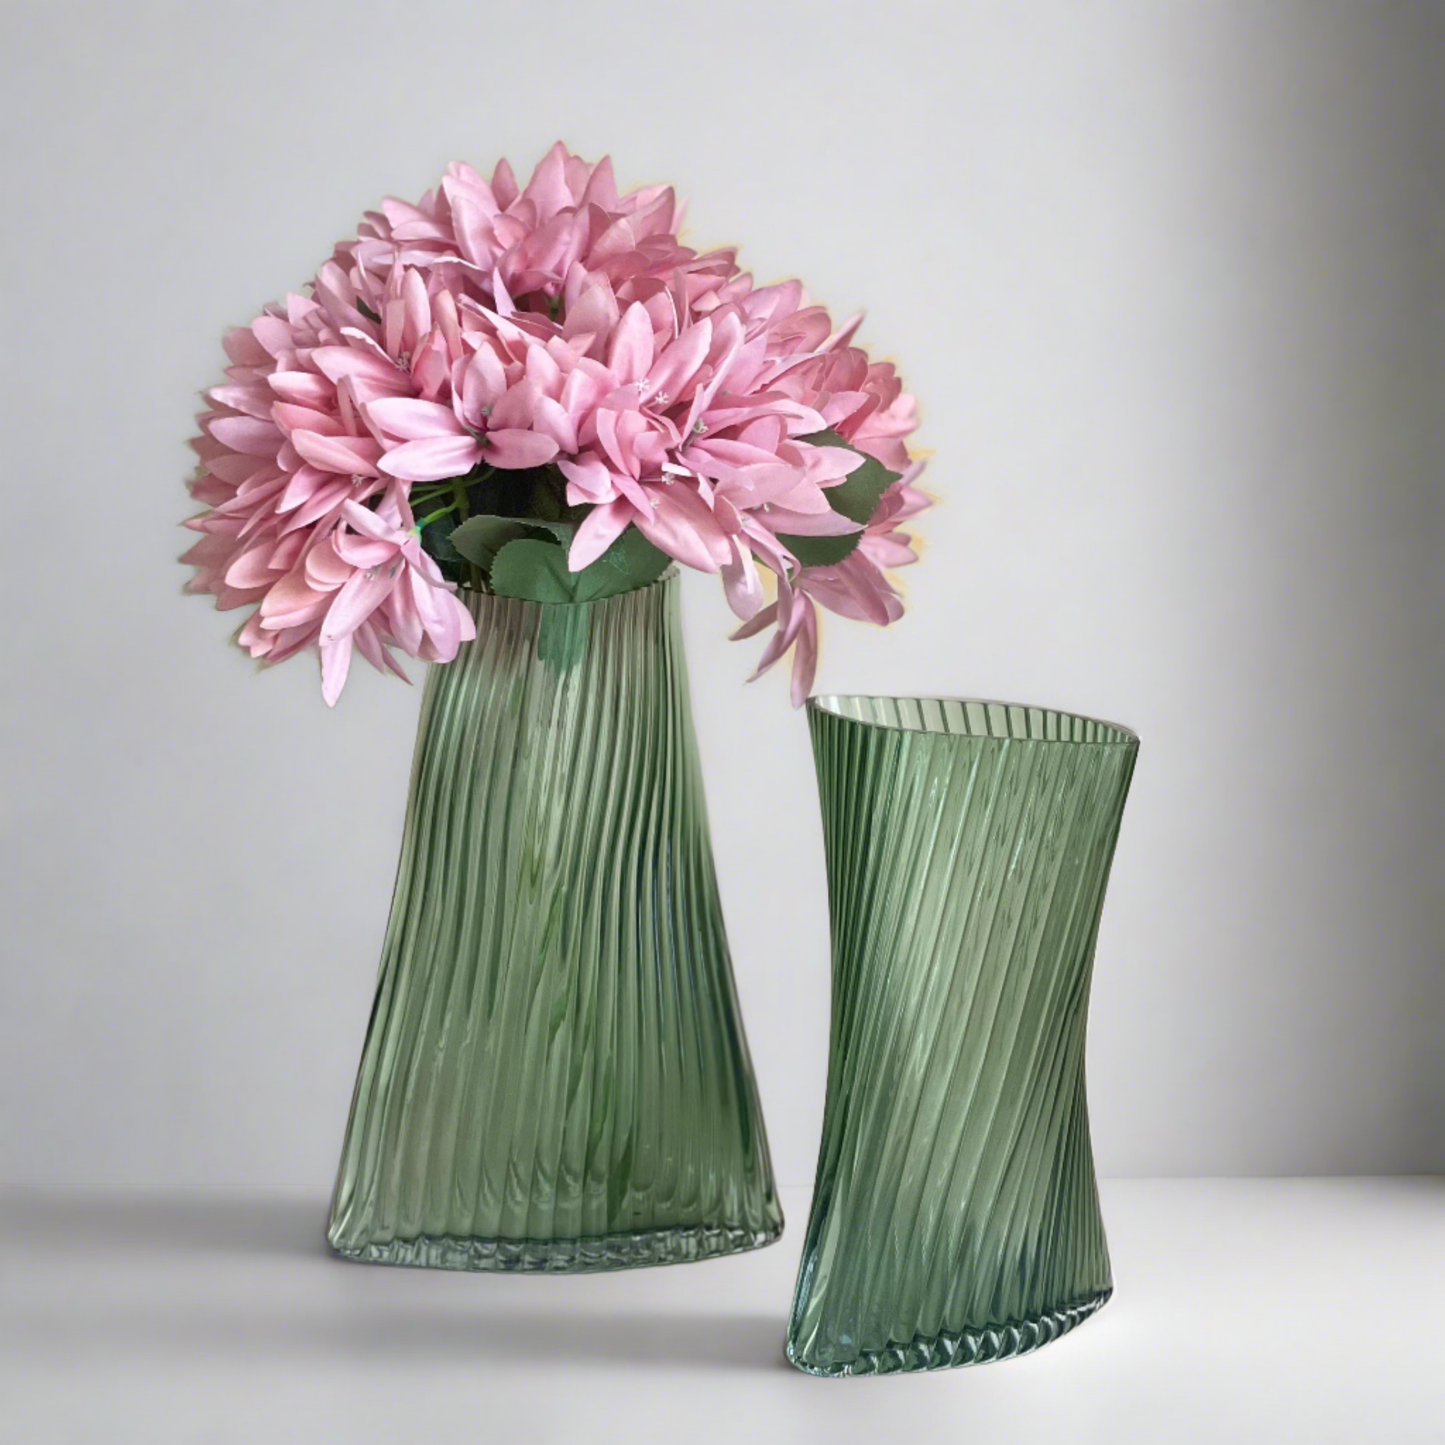 Mangata Green vase (Large)